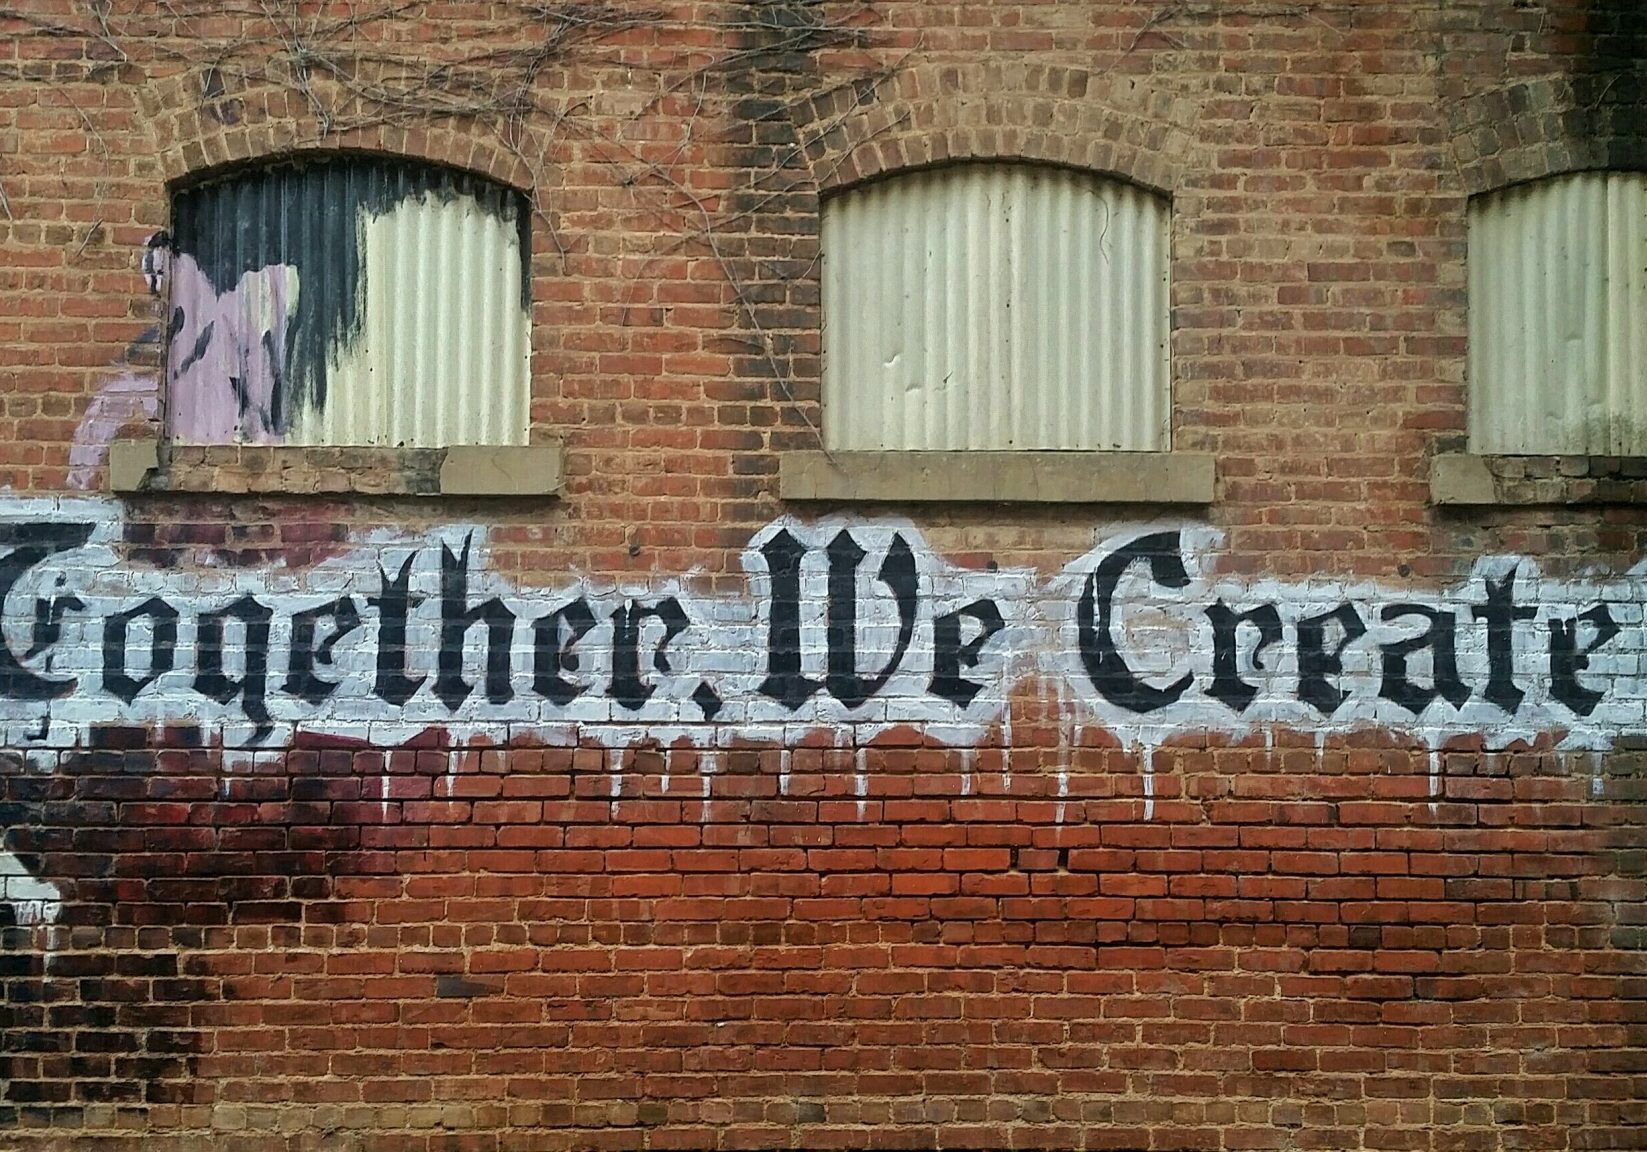 Together we create